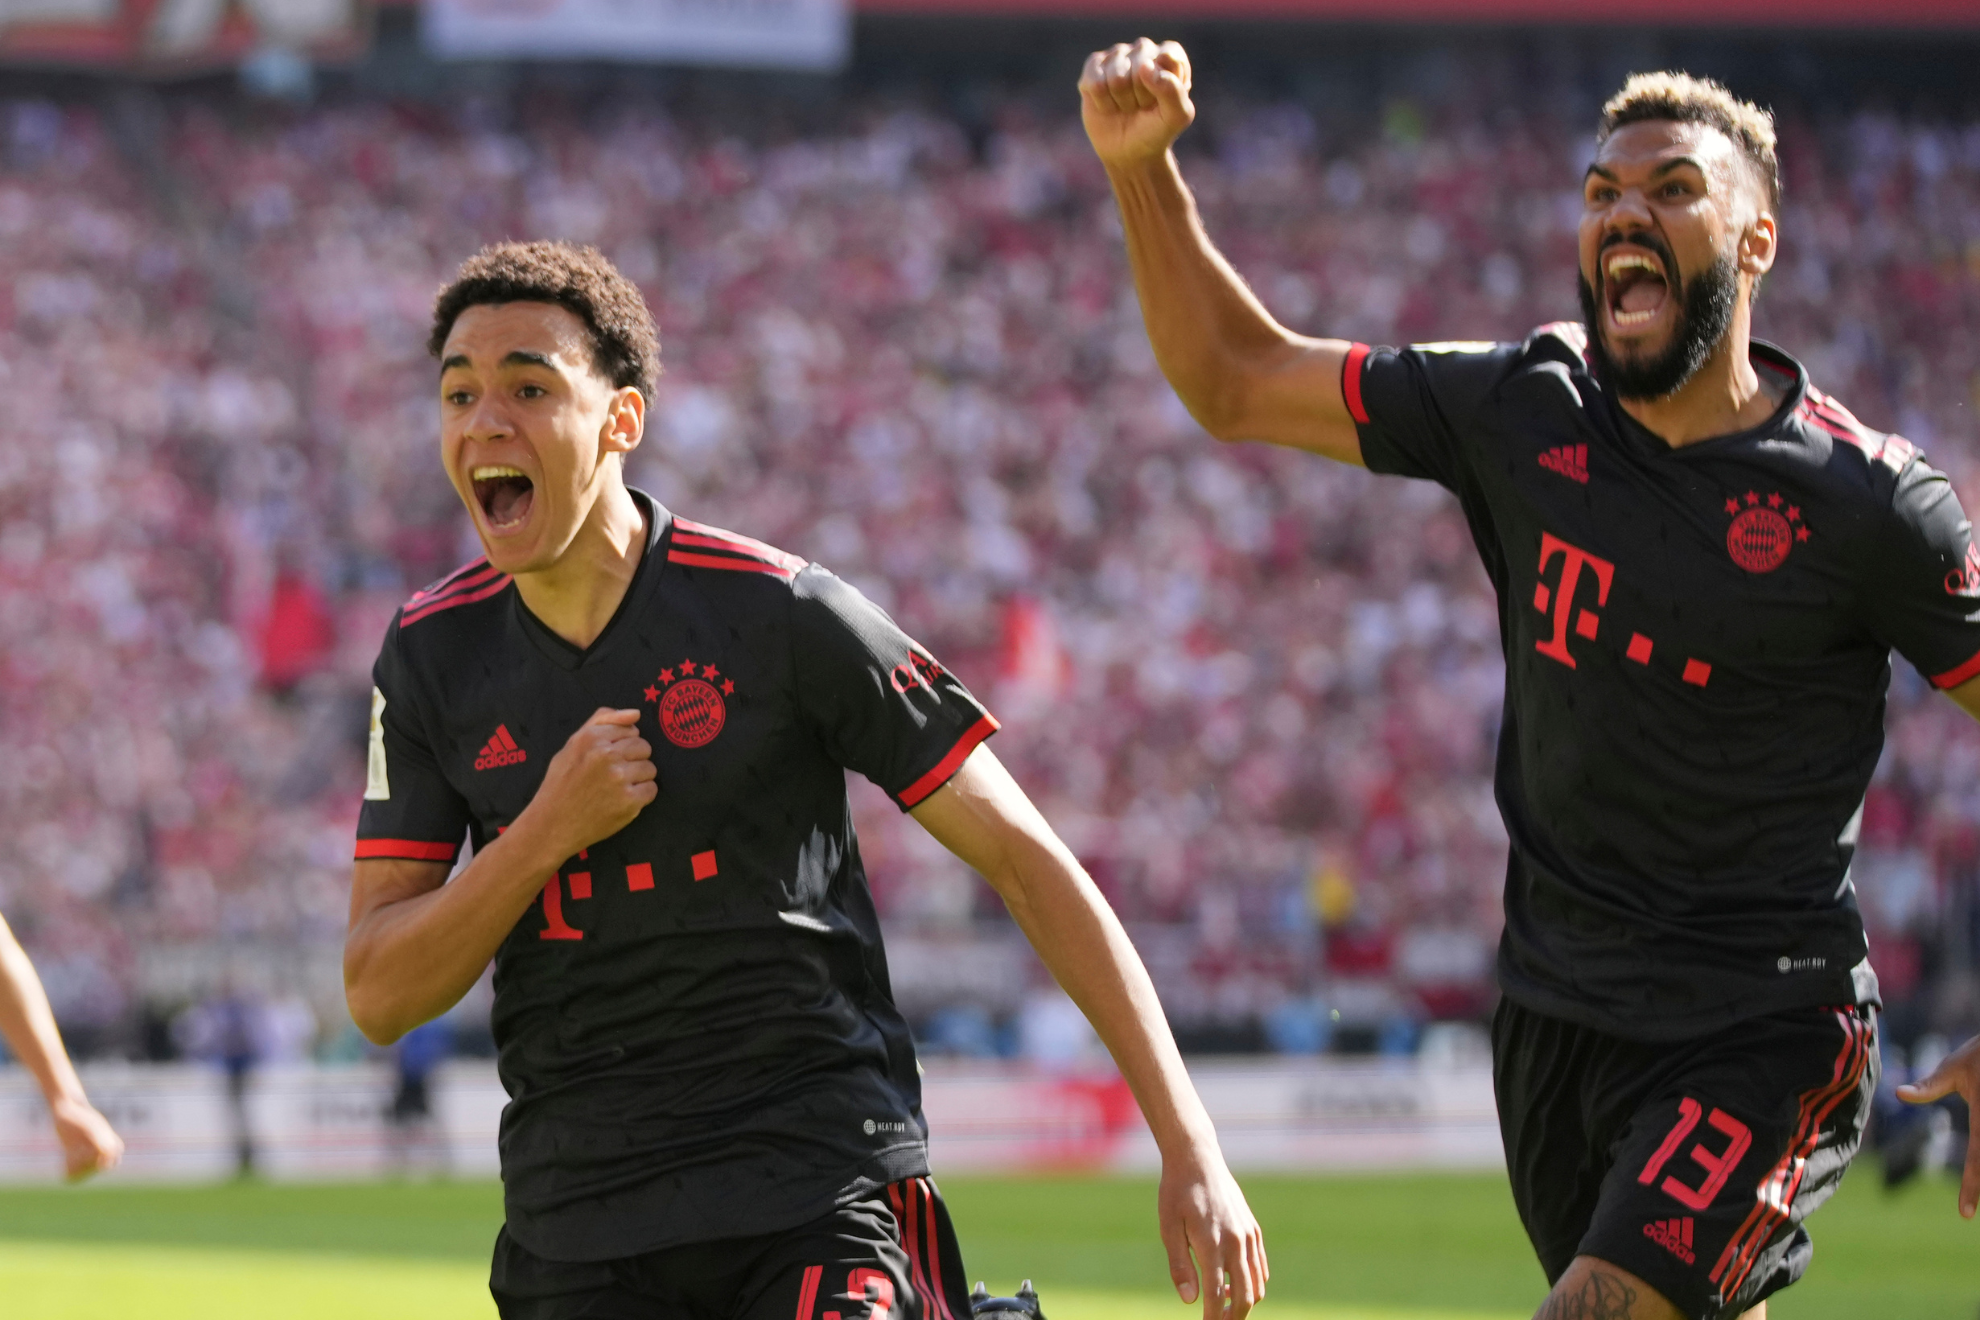 Twenty-year-old phenom Musiala (left) scored the goal that brought Bayern its record 33rd Bundesliga crown.